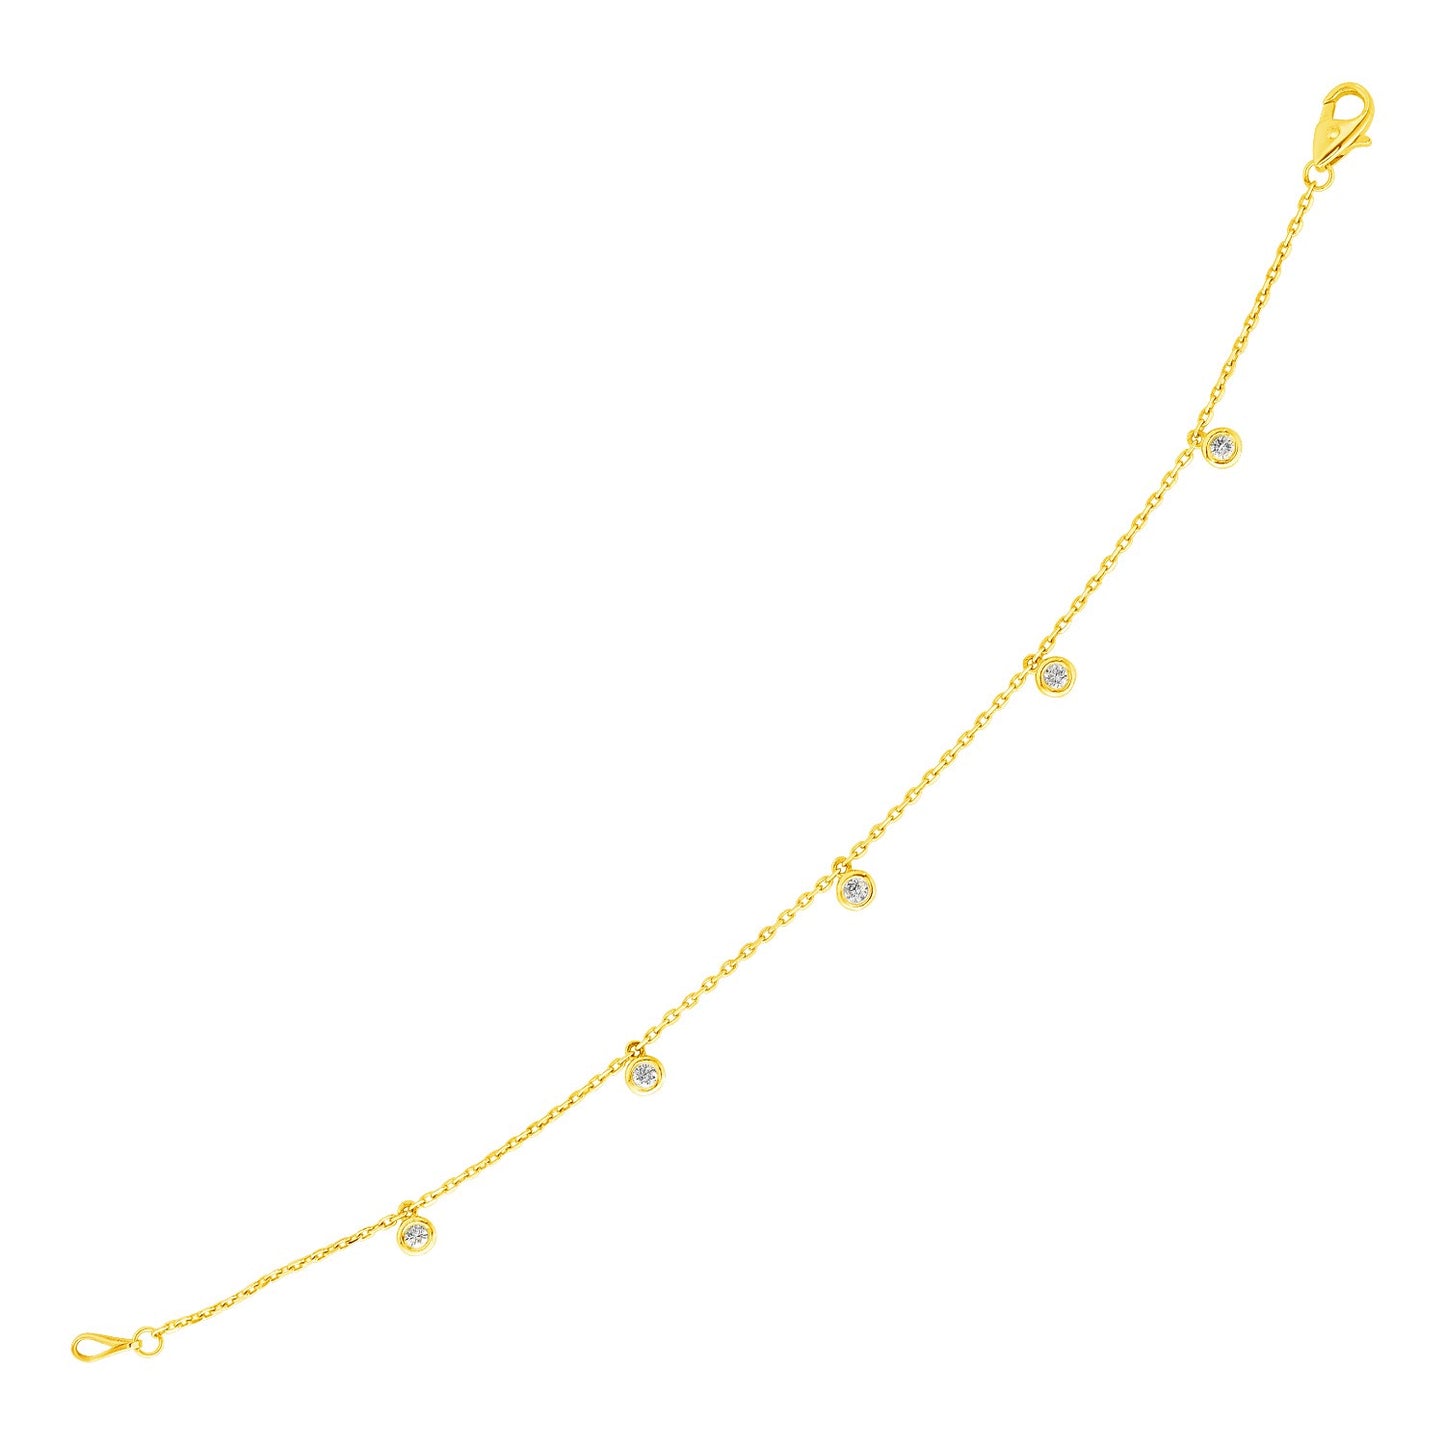 14k Yellow Gold 7 inch Bracelet with Diamond Charms